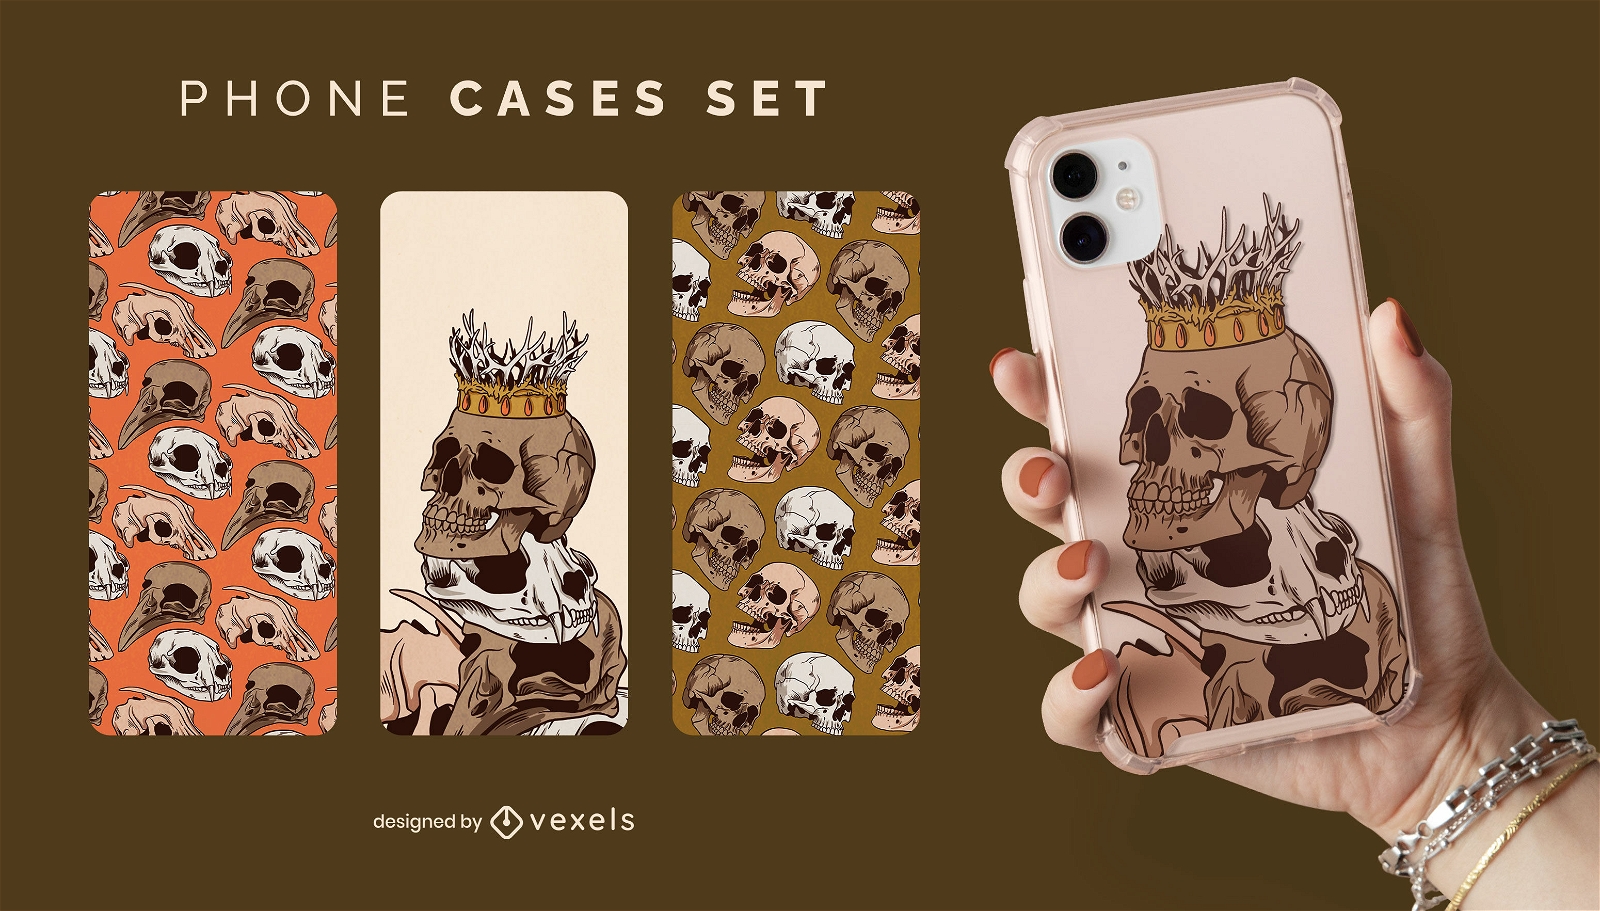 Skulls and skeletons creepy phone case set